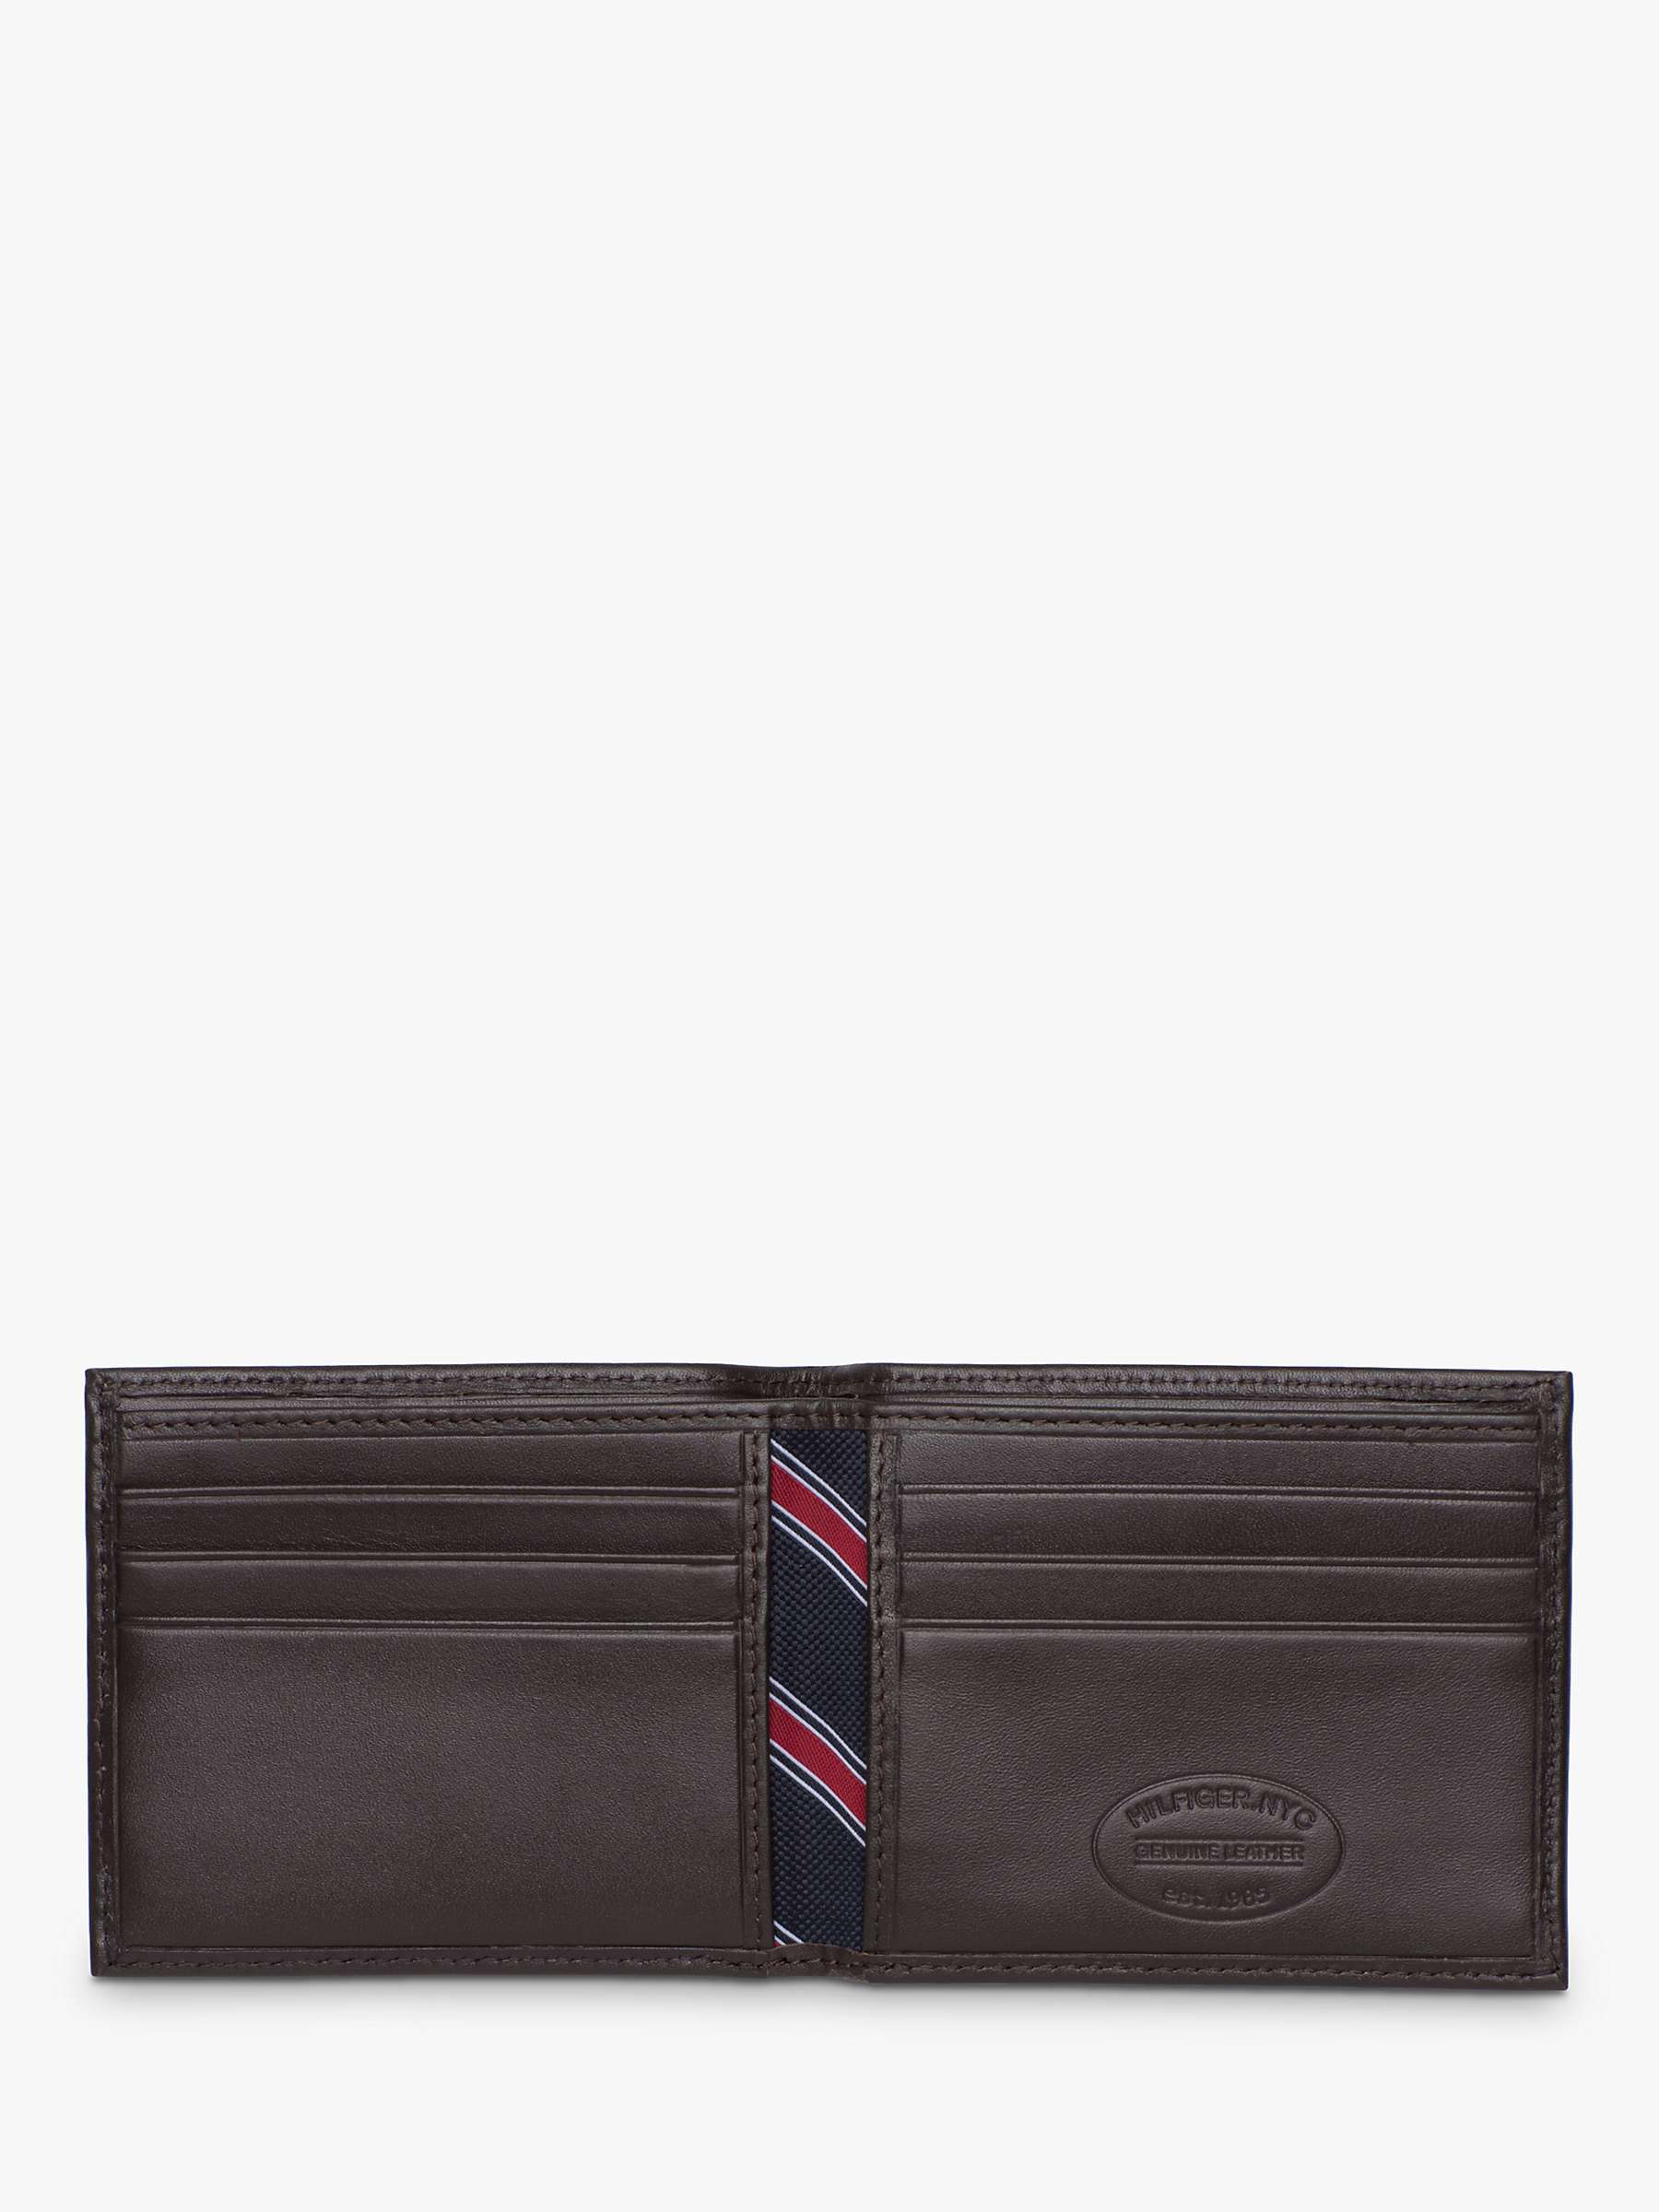 Buy Tommy Hilfiger Eton Leather Mini Wallet Online at johnlewis.com